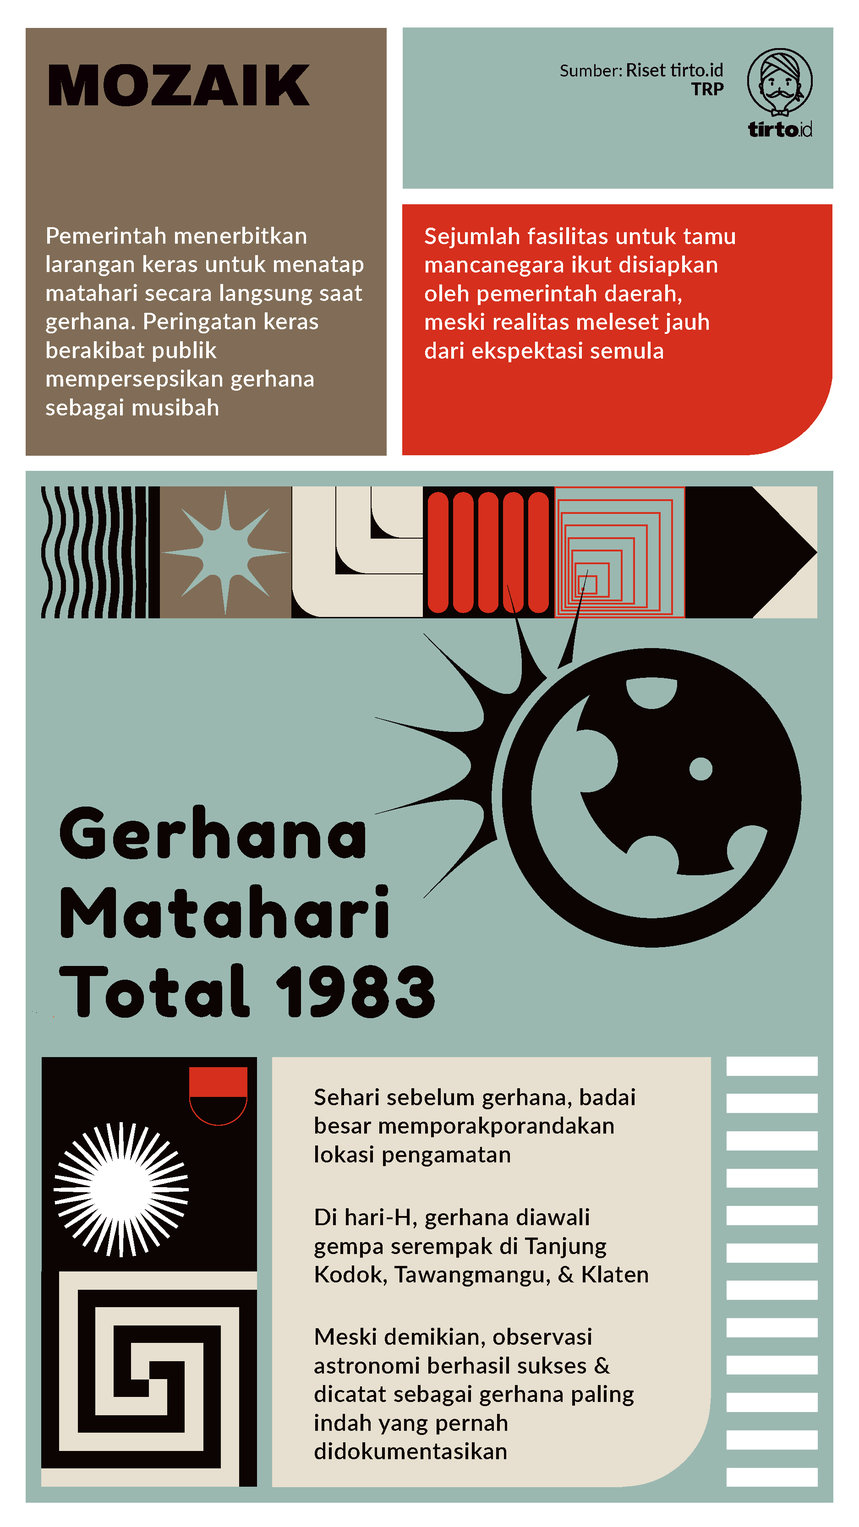 Infografik Mozaik Gerhana Matahari Total